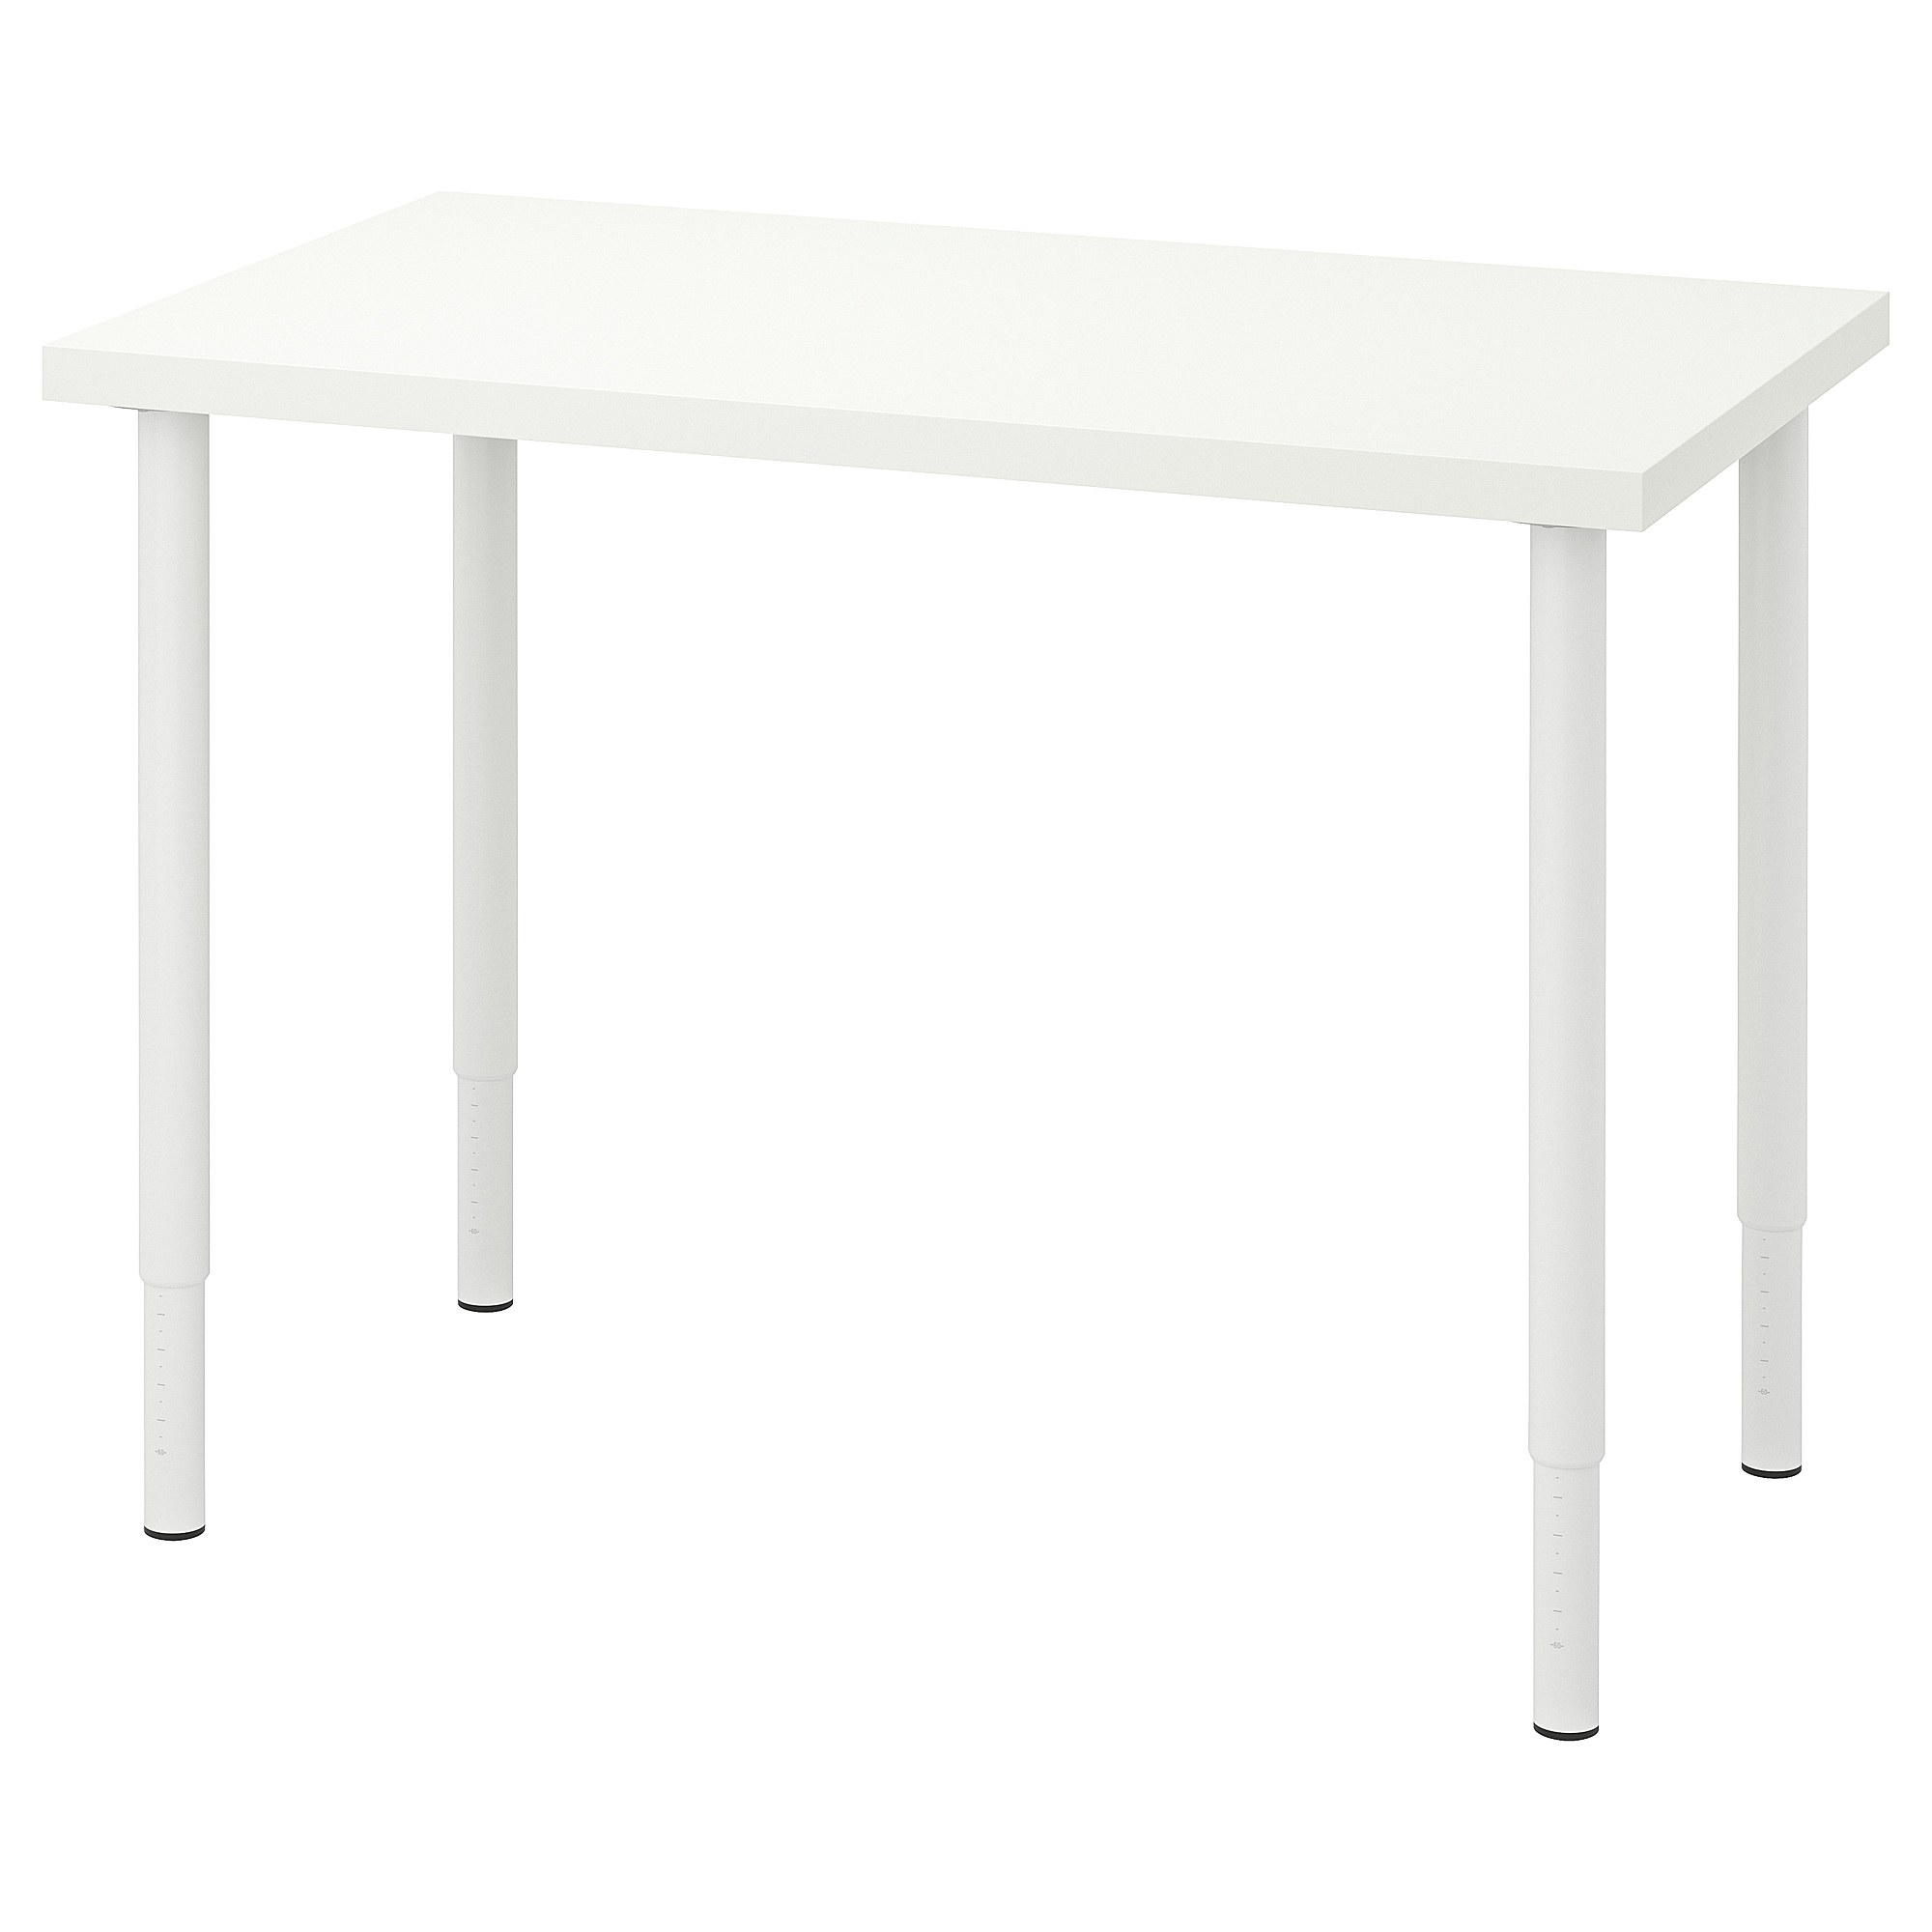 Стол высота 75 см. Linnmon ЛИННМОН Adils АДИЛЬС стол белый 100x60 см. Стол Linnmon ikea. Melltorp МЕЛЬТОРП стол белый 75x75 см. МЕЛЬТОРП стол, белый, 75x75 см.